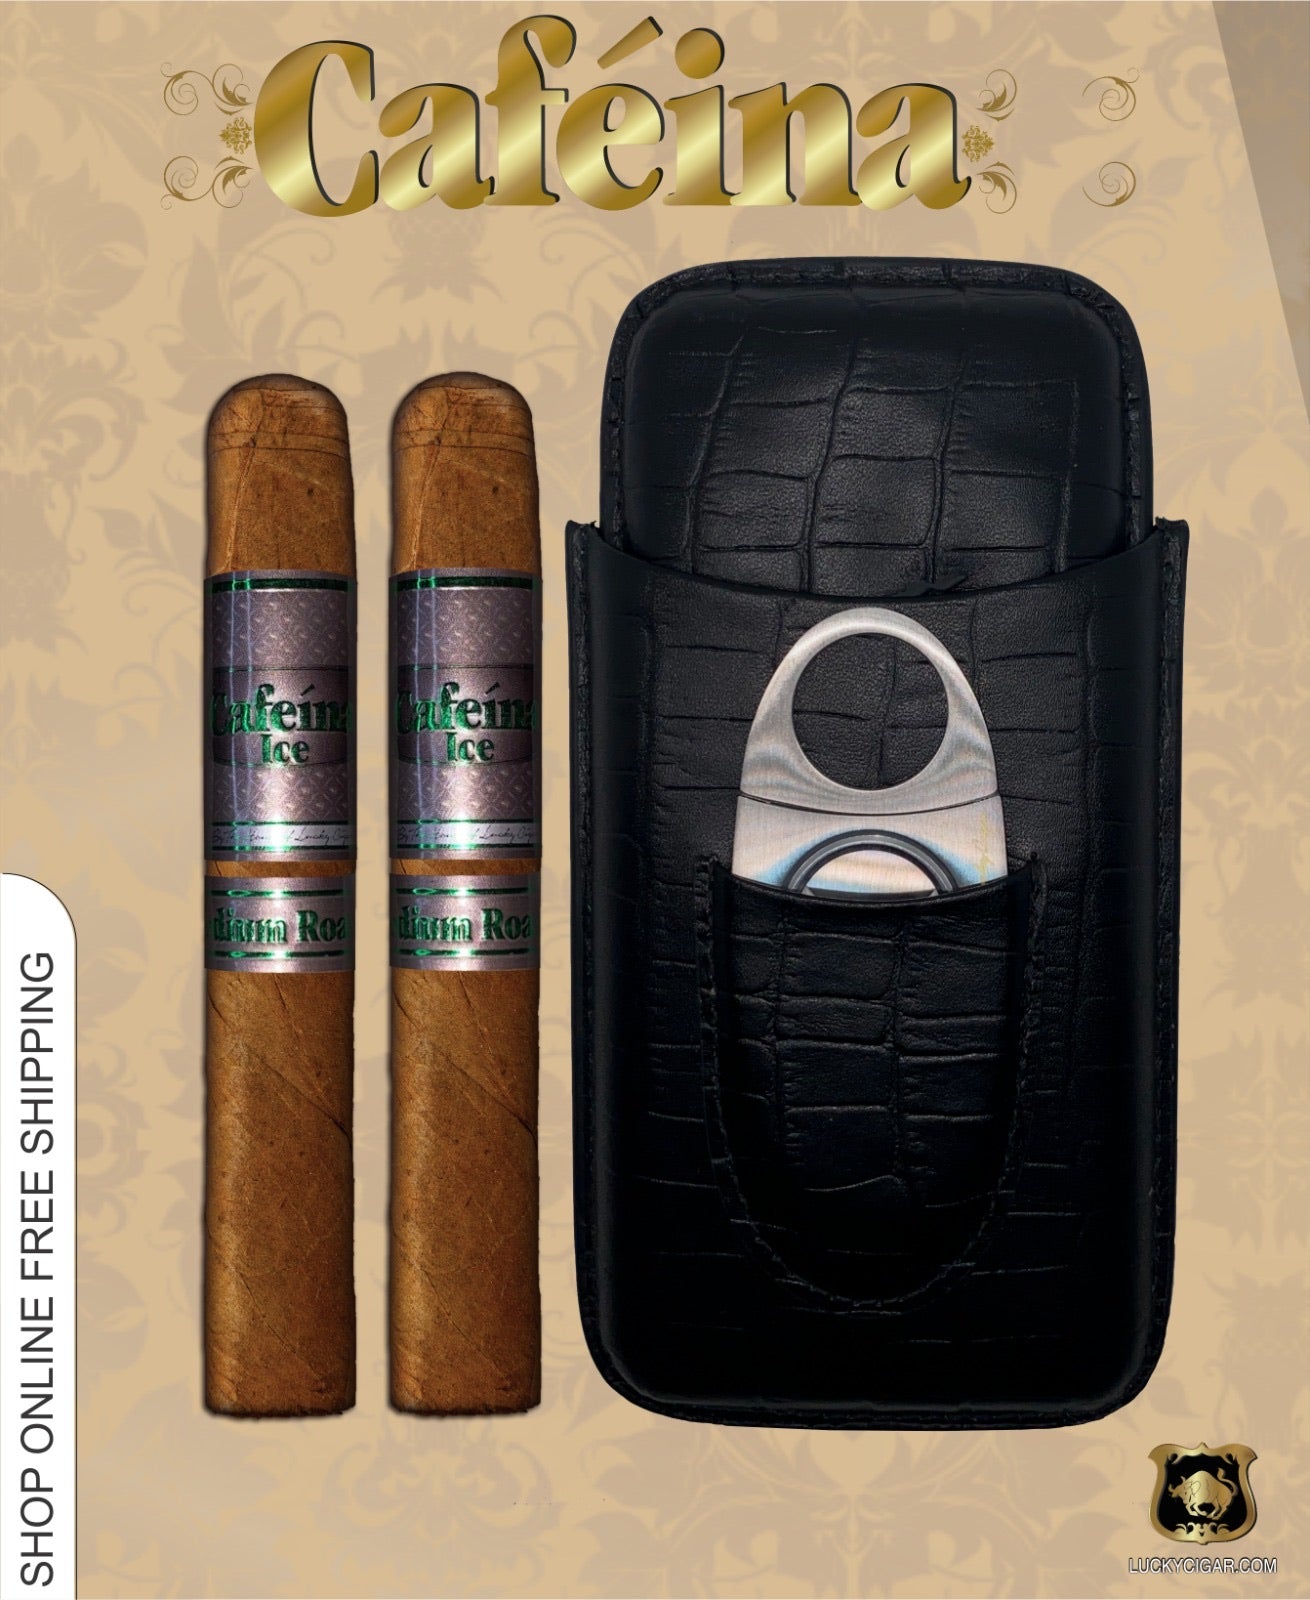 Infused Cigars: Set of 2 Cafeina Ice Medium Roast Corona 5.5x48 Cigars with Travel Humidor